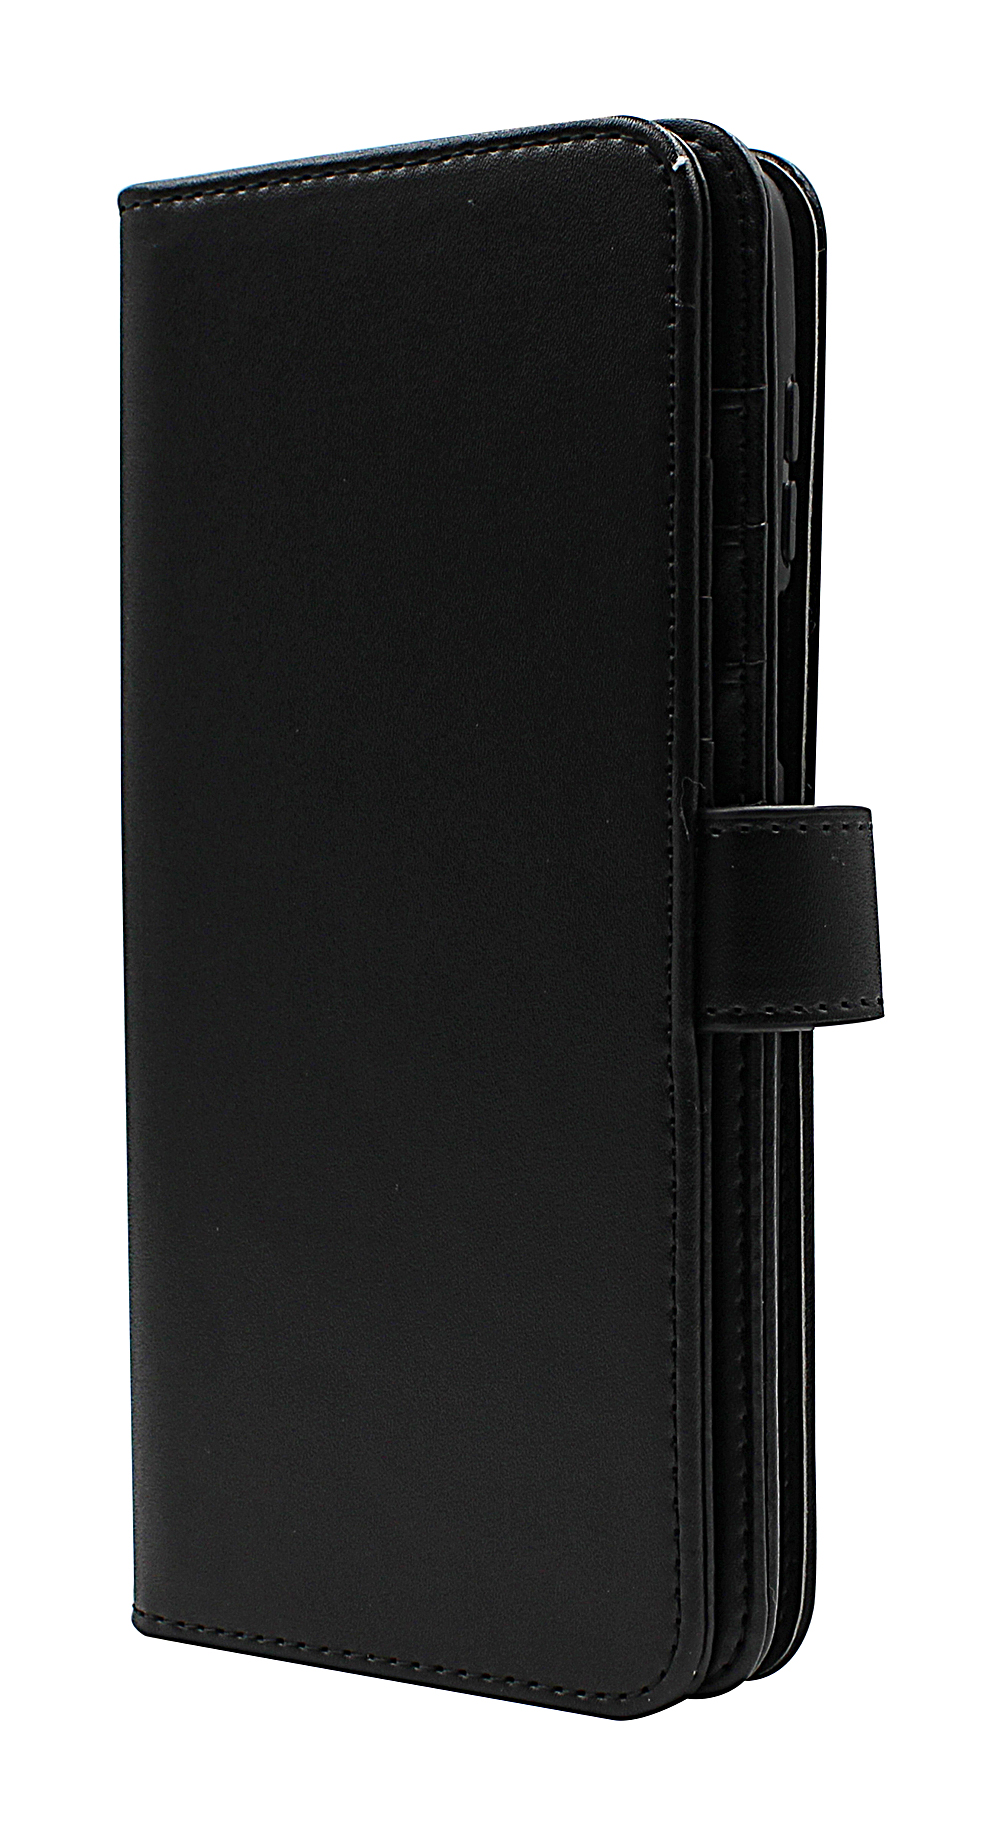 CoverInSkimblocker XL Wallet Motorola Moto G100